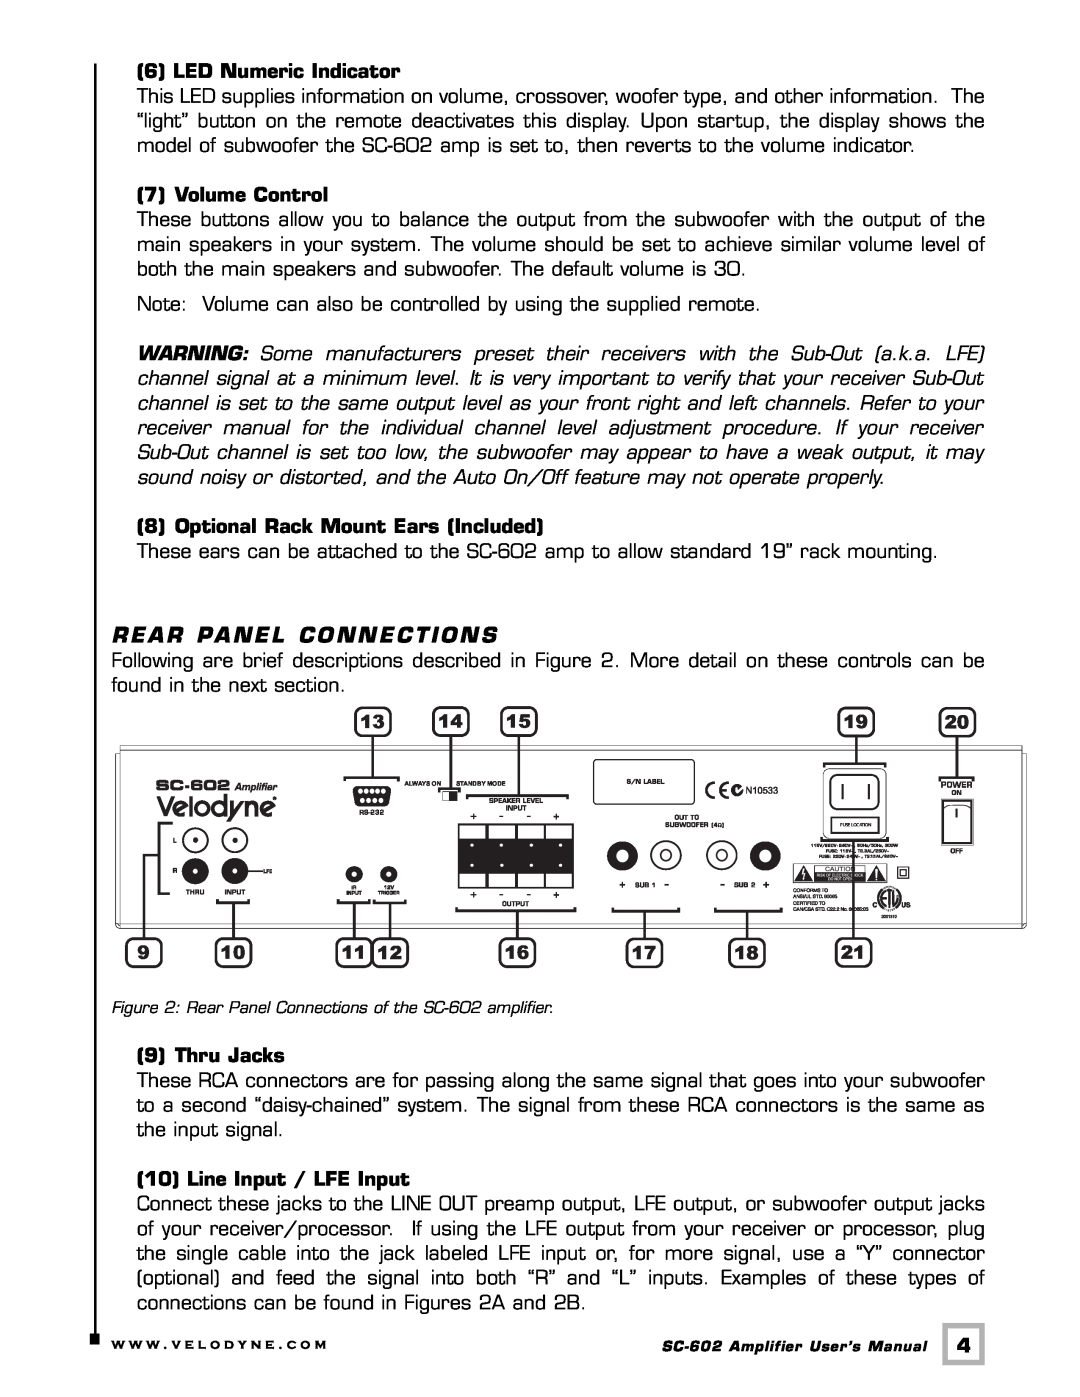 Velodyne Acoustics SC-602 user manual LED Numeric Indicator, Volume Control, Optional Rack Mount Ears Included, Thru Jacks 